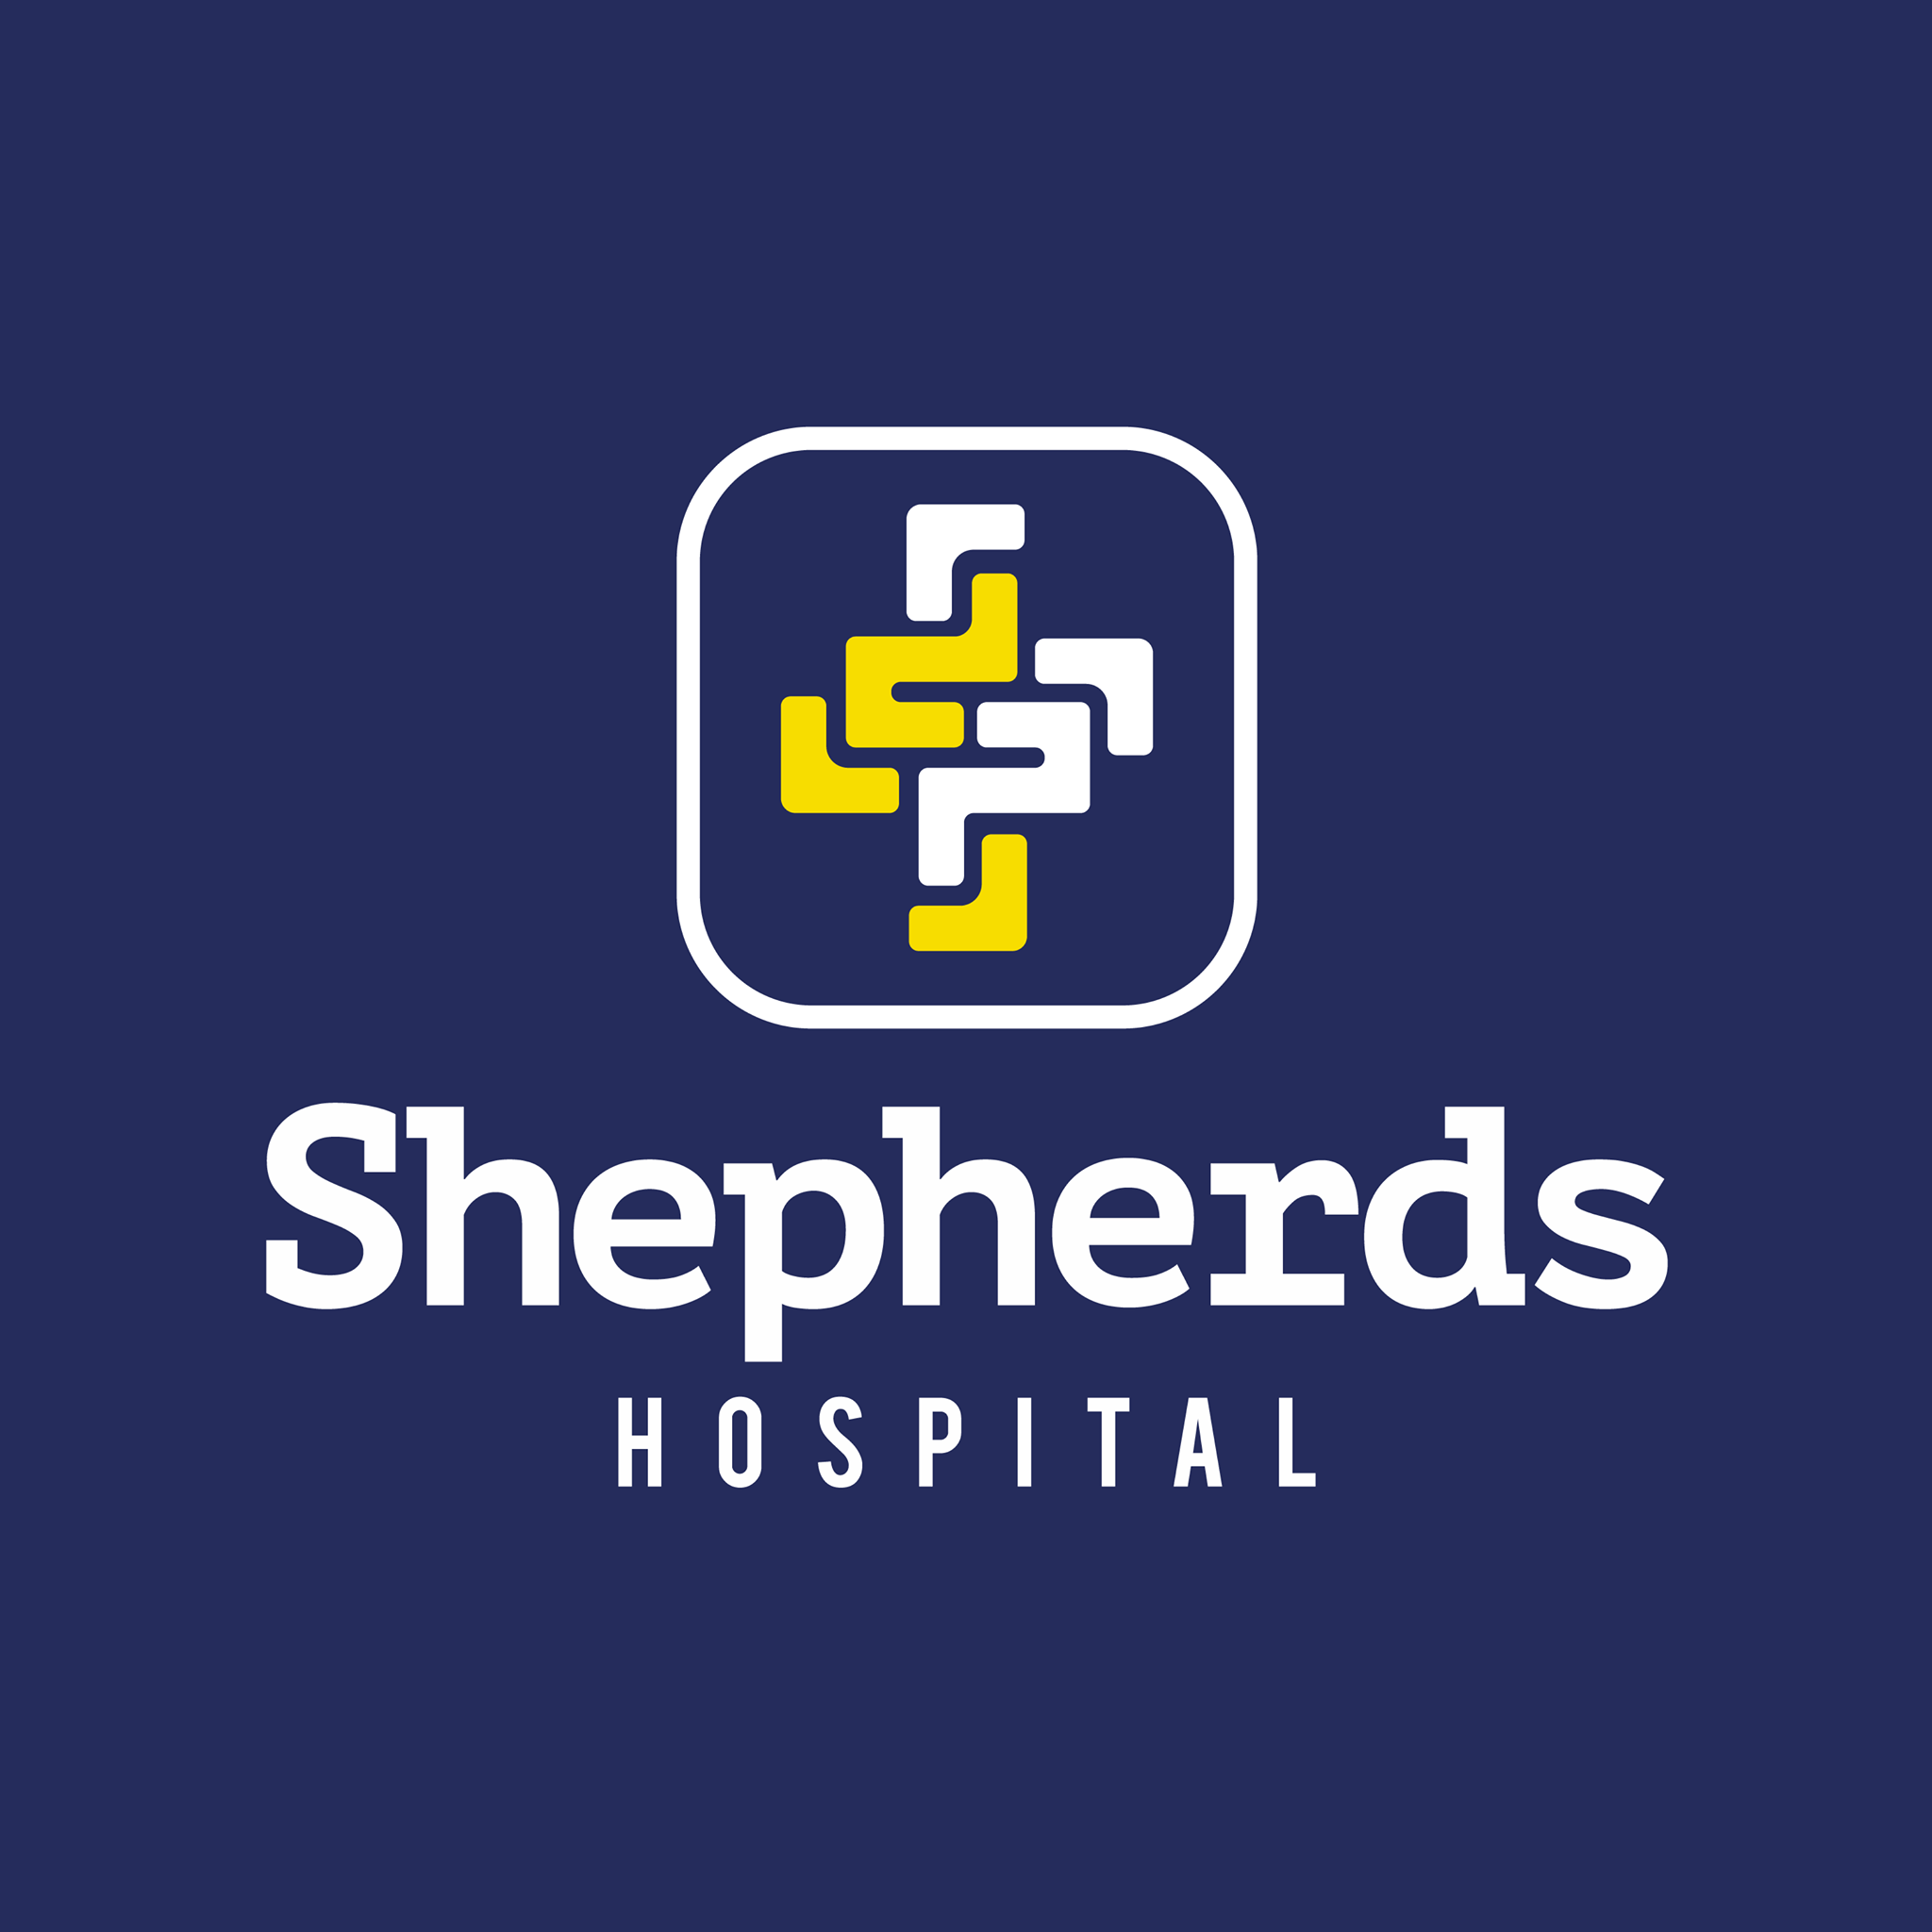 The Shepherds Hospitals